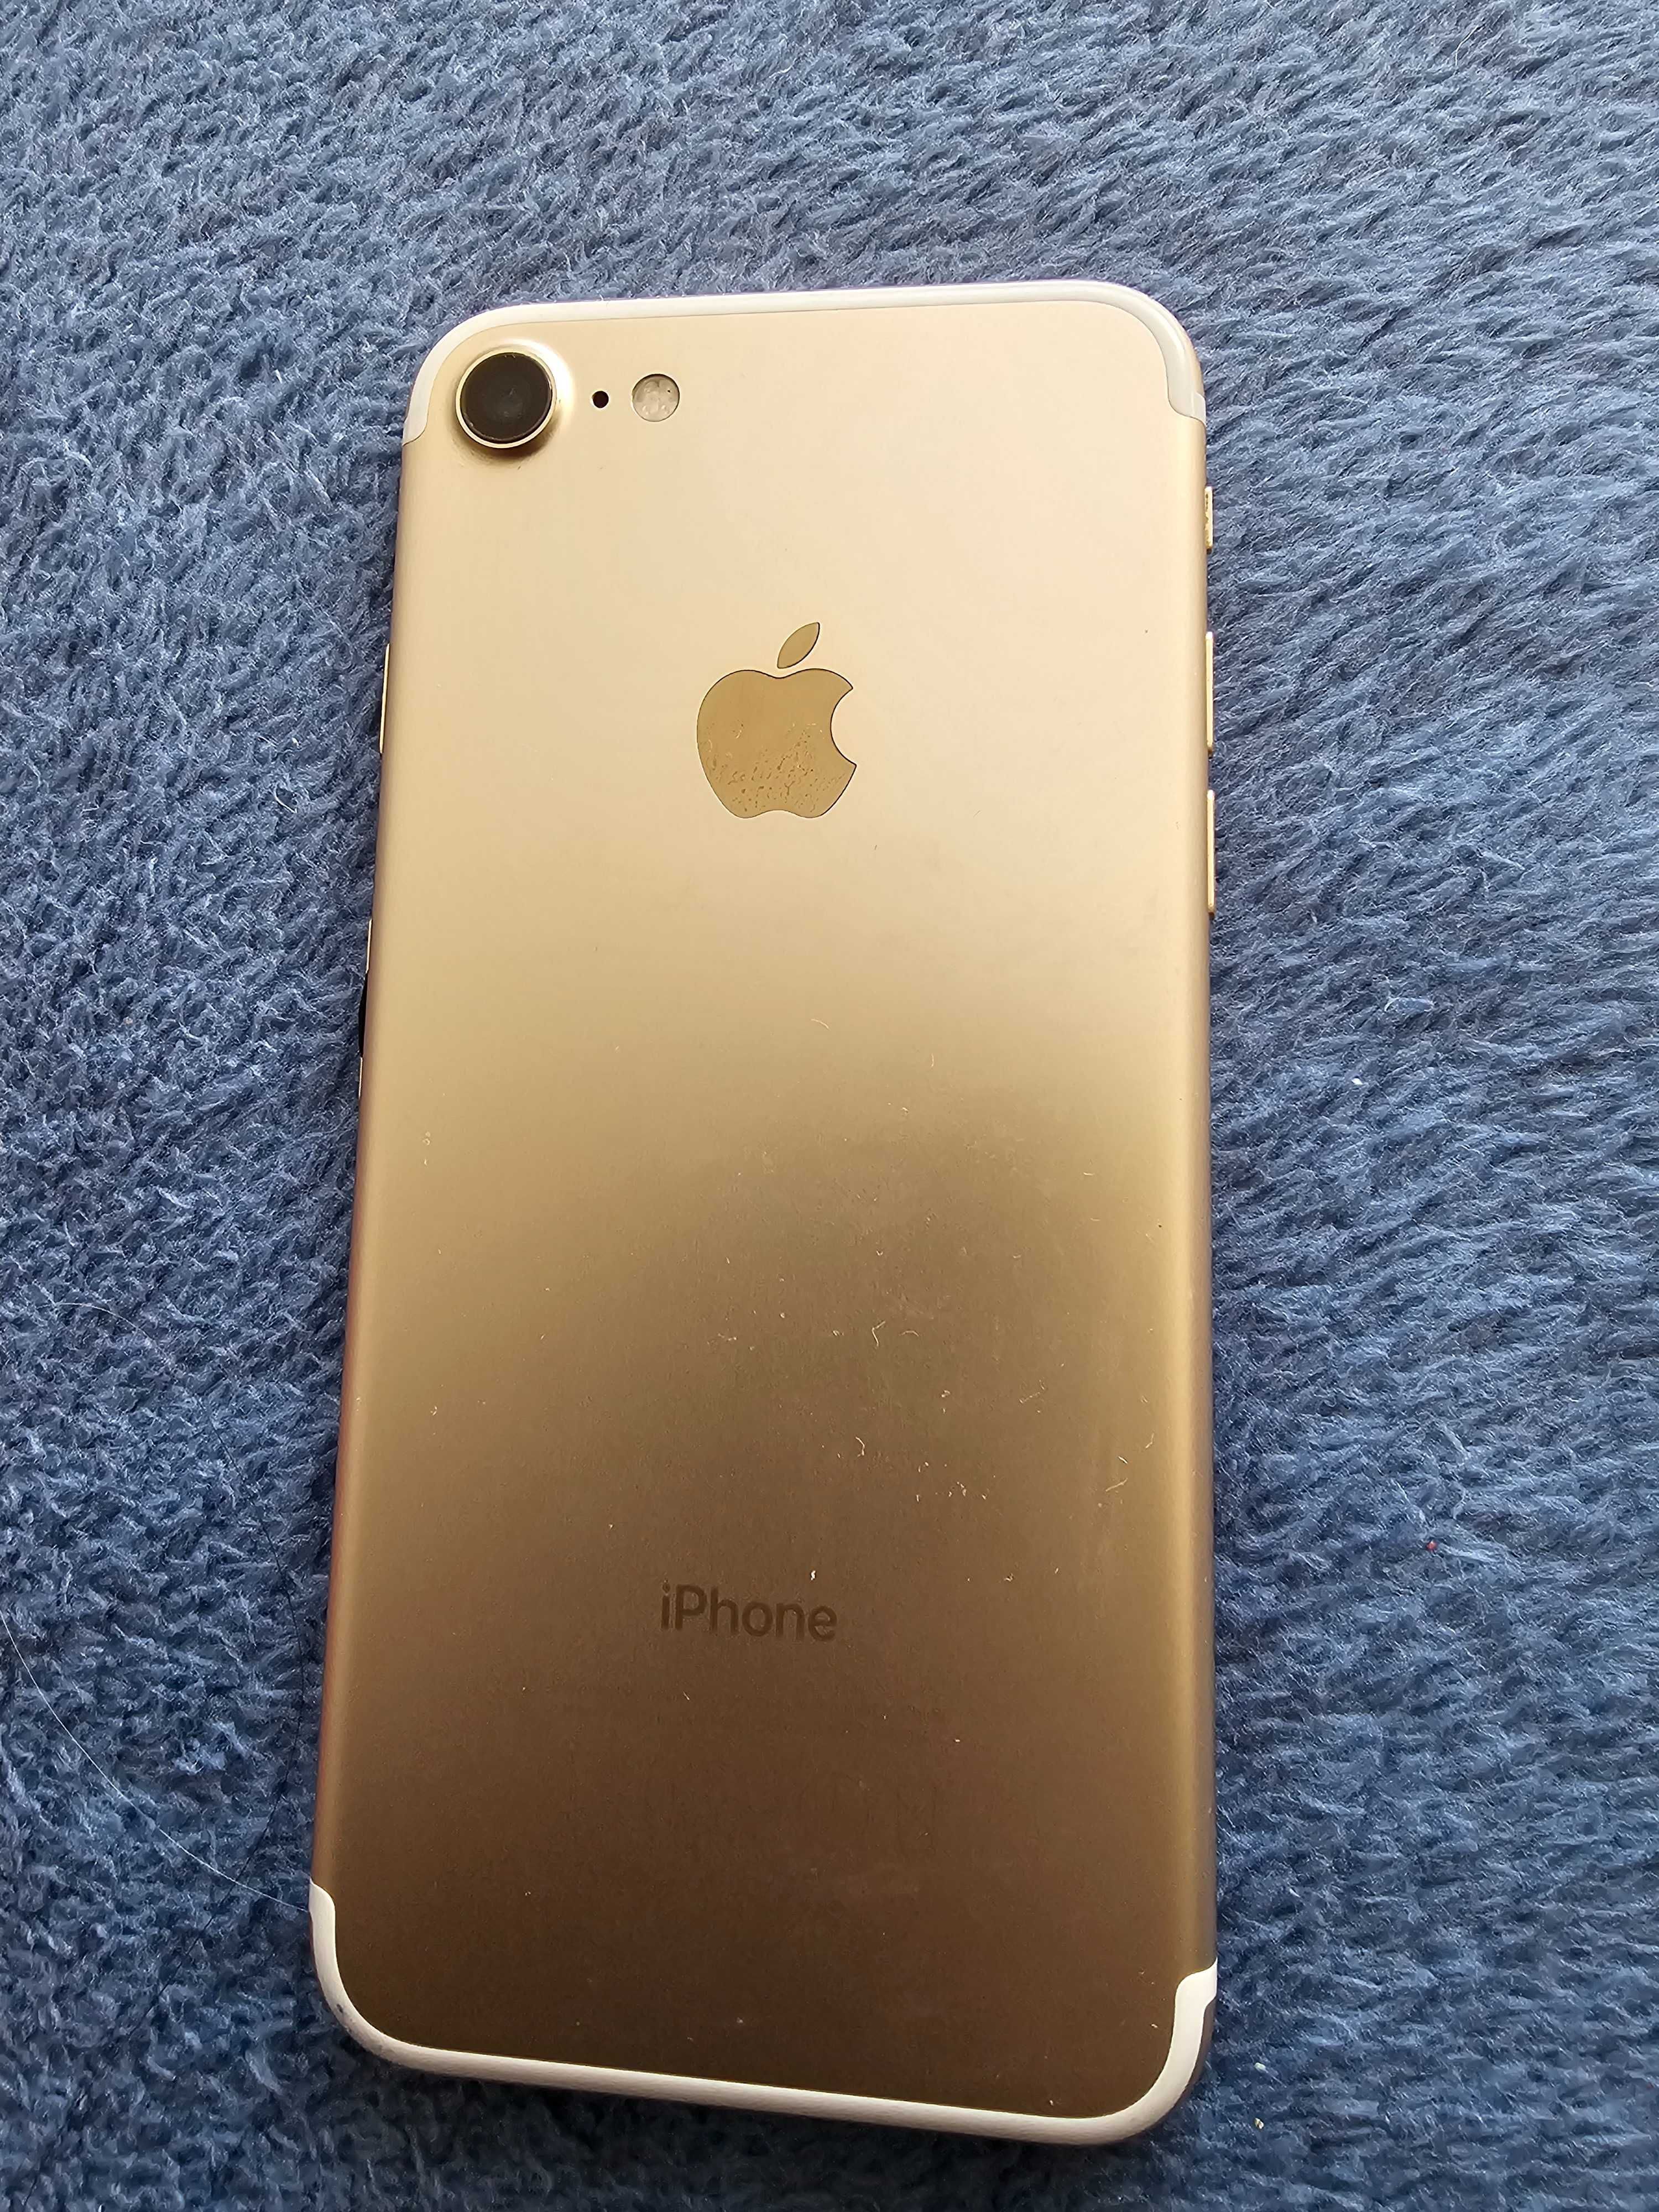 iPhone 7 gold 128 gb